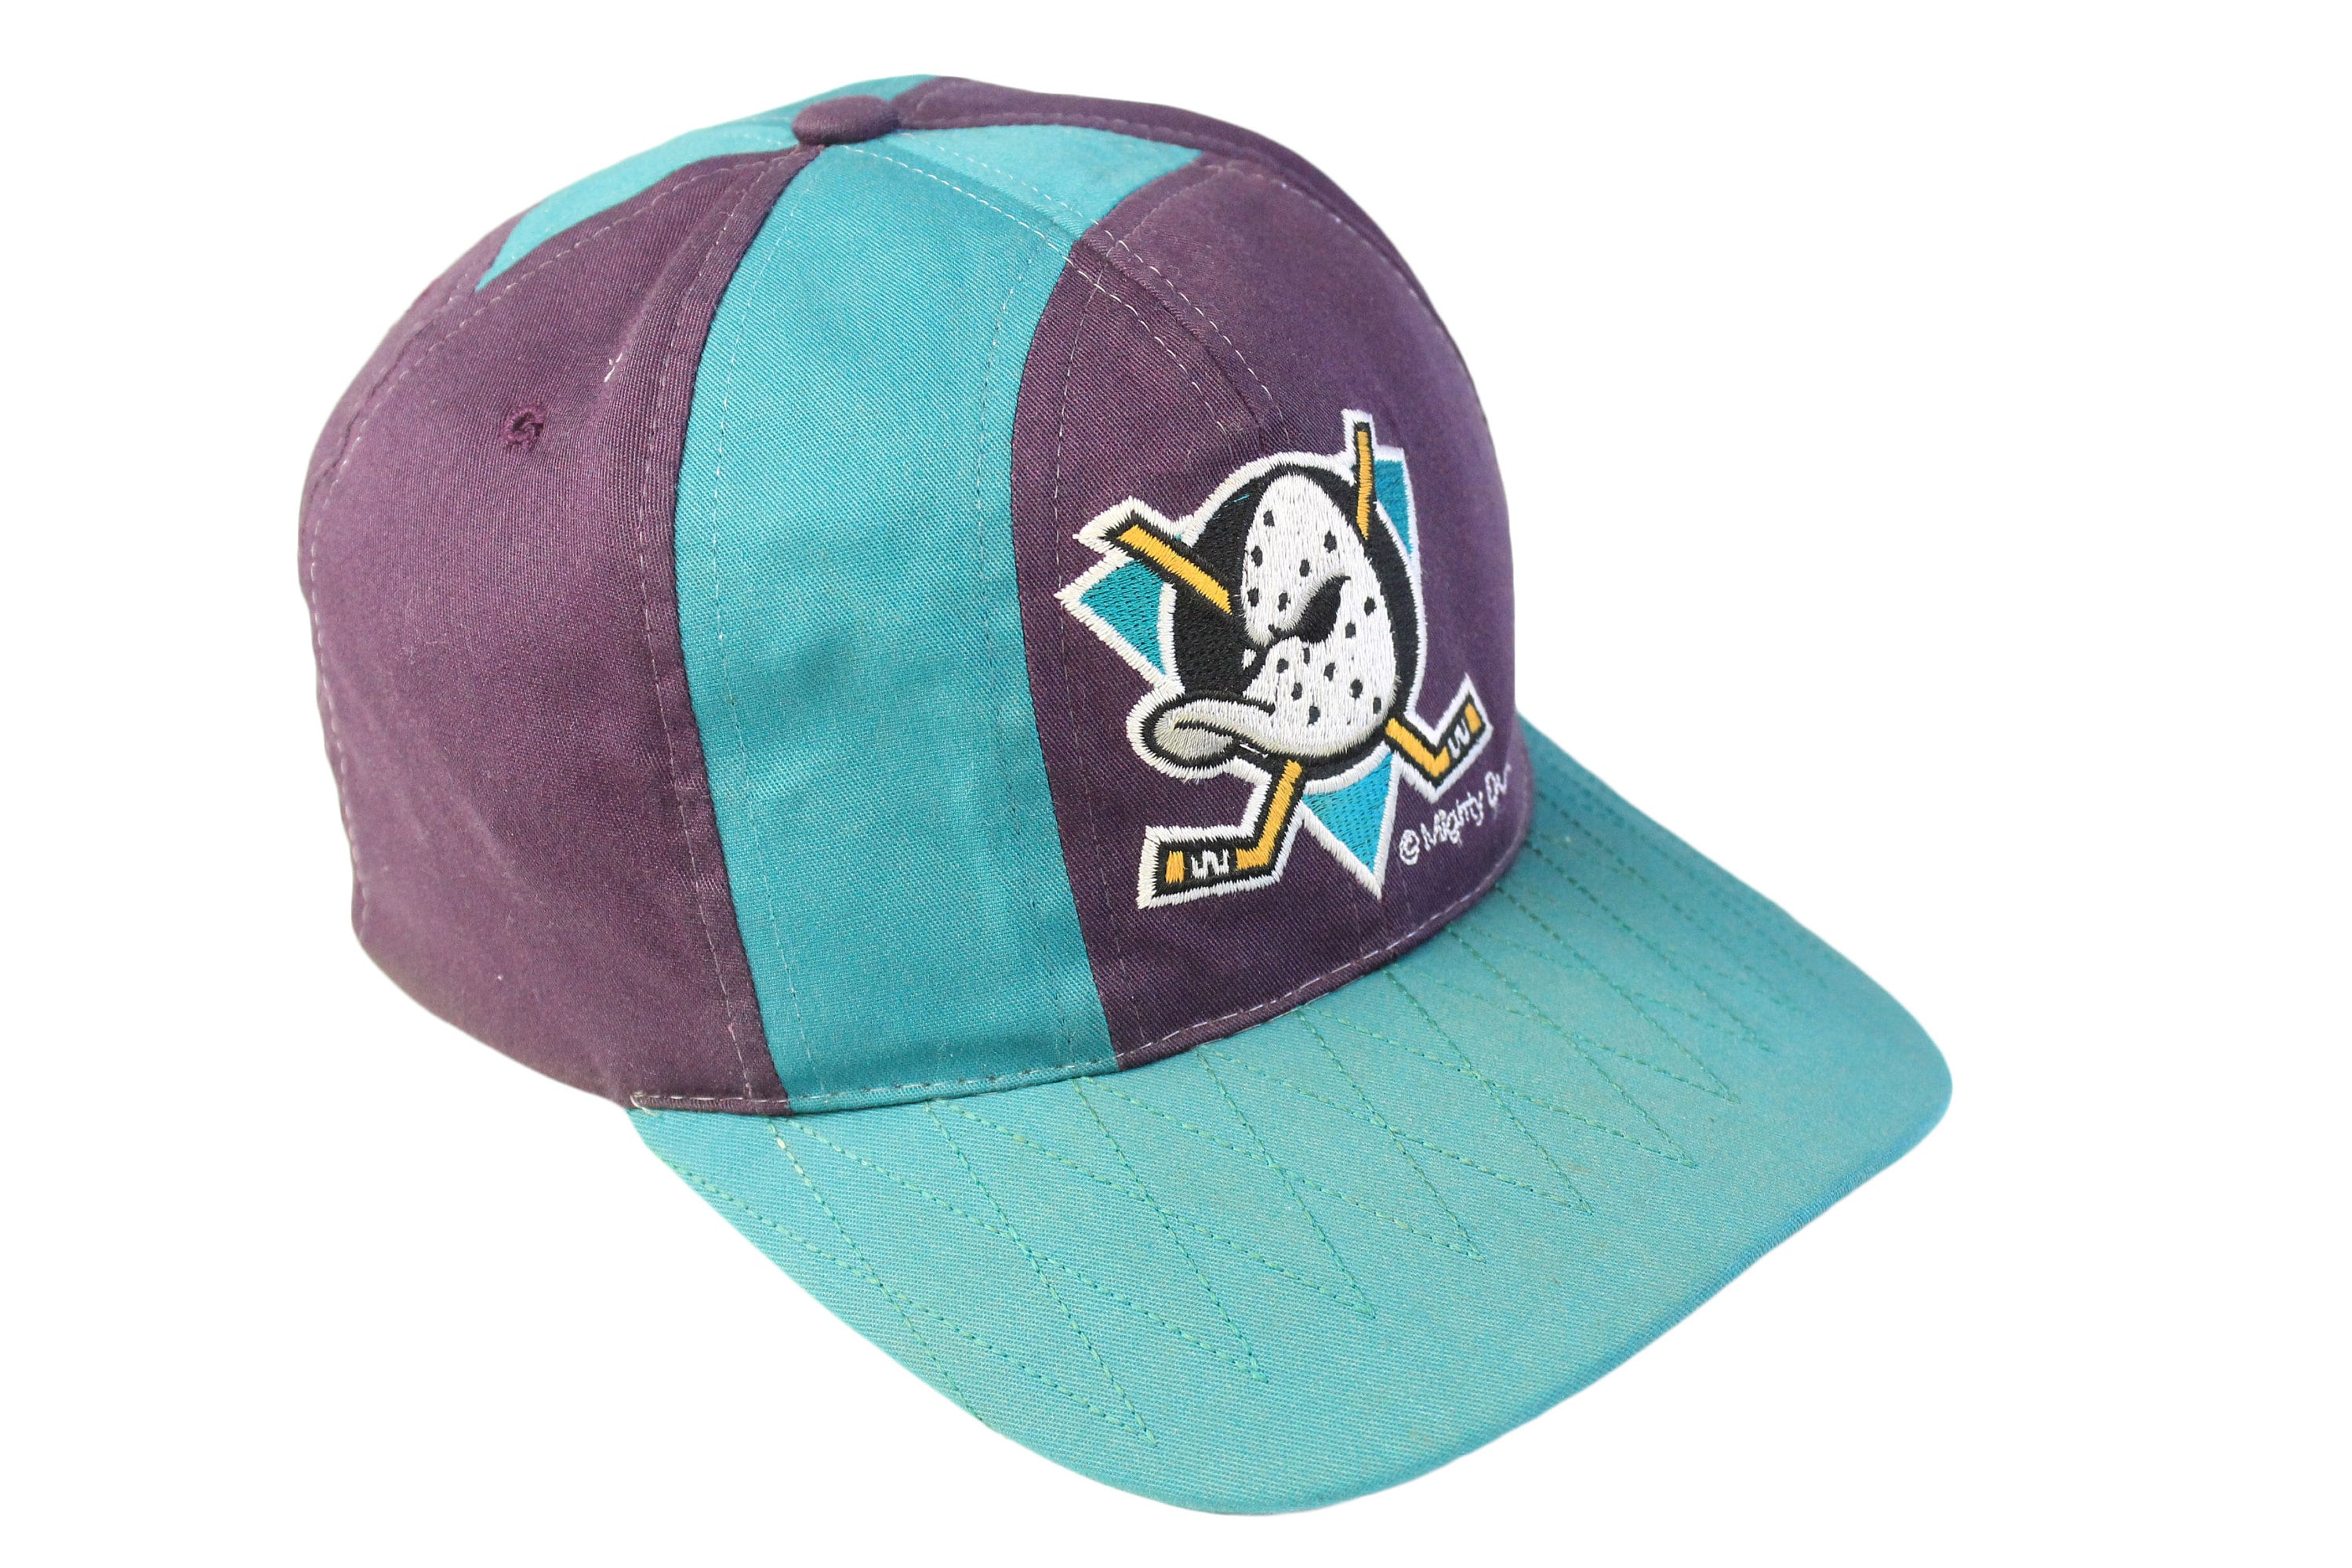 Vintage 90s NHL Hockey Anaheim Mighty Ducks Snapback Hat Cap Made in USA